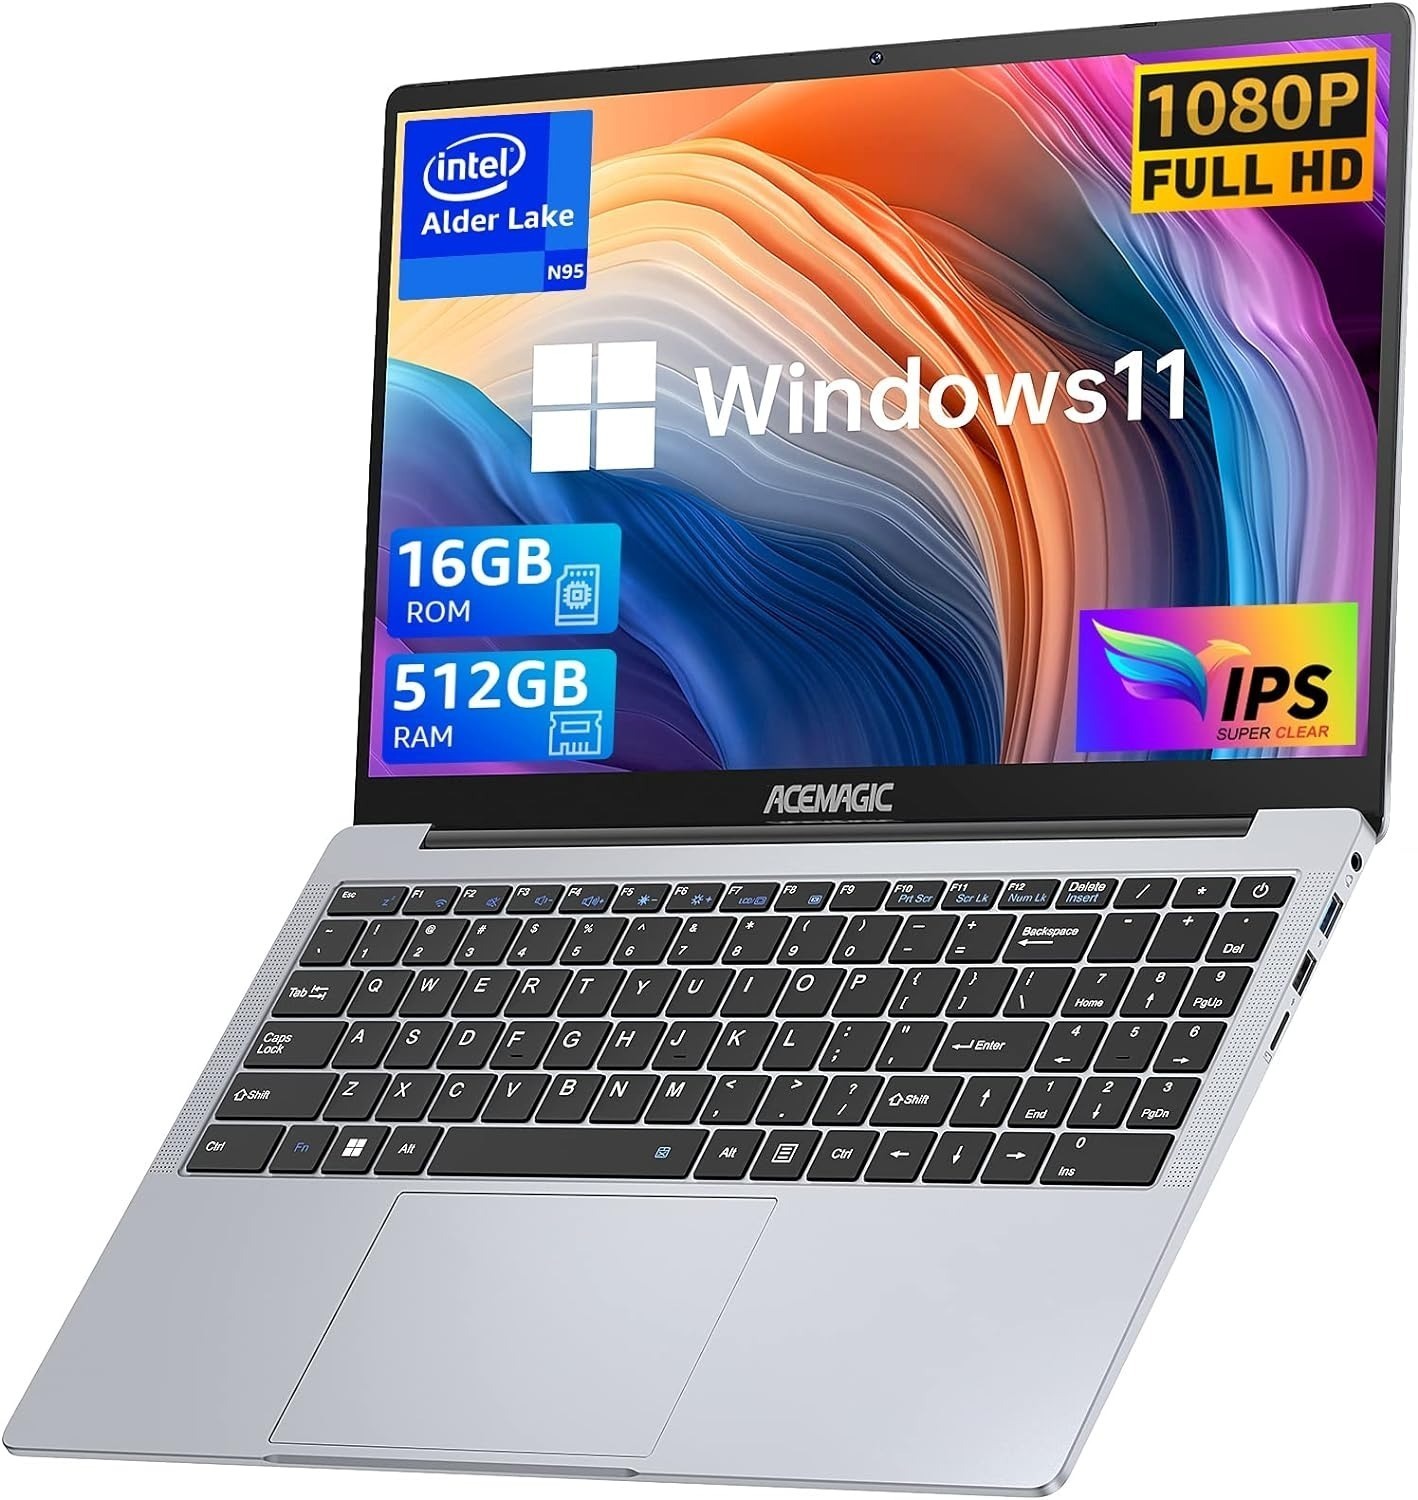 ACEMAGIC ‎AX15 Laptop: 15.6" FHD Display, Intel Quad-Core 12th Alder Lake N95, 16GB DDR4, 512GB SSD $230 + Free Shipping